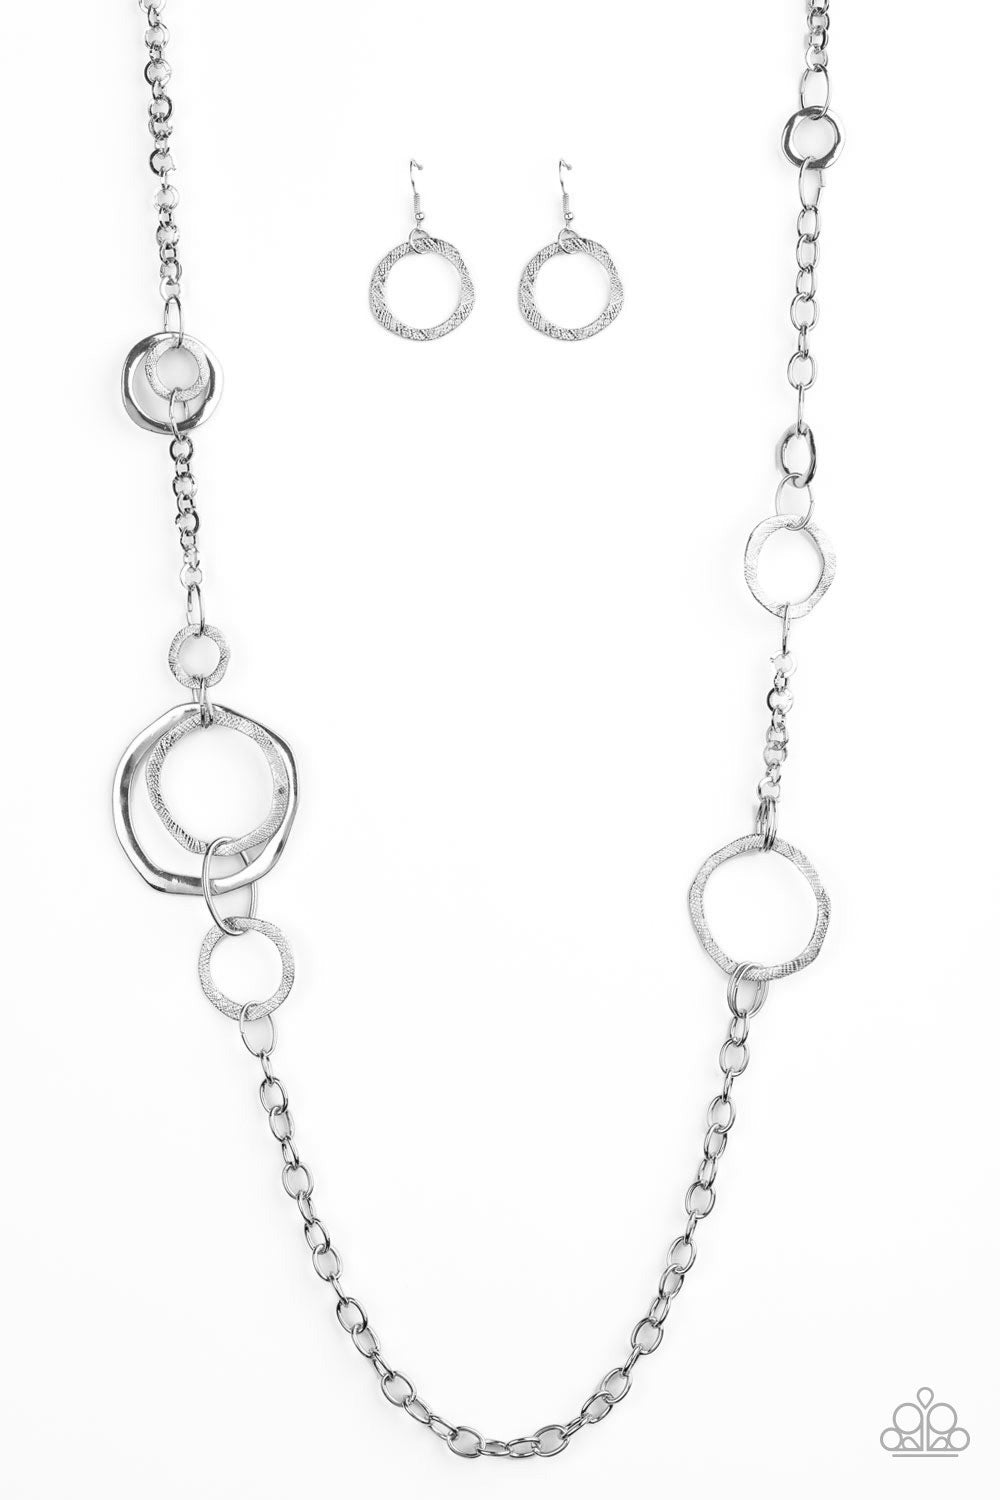 Amped Up Metallics - Silver Necklace Set